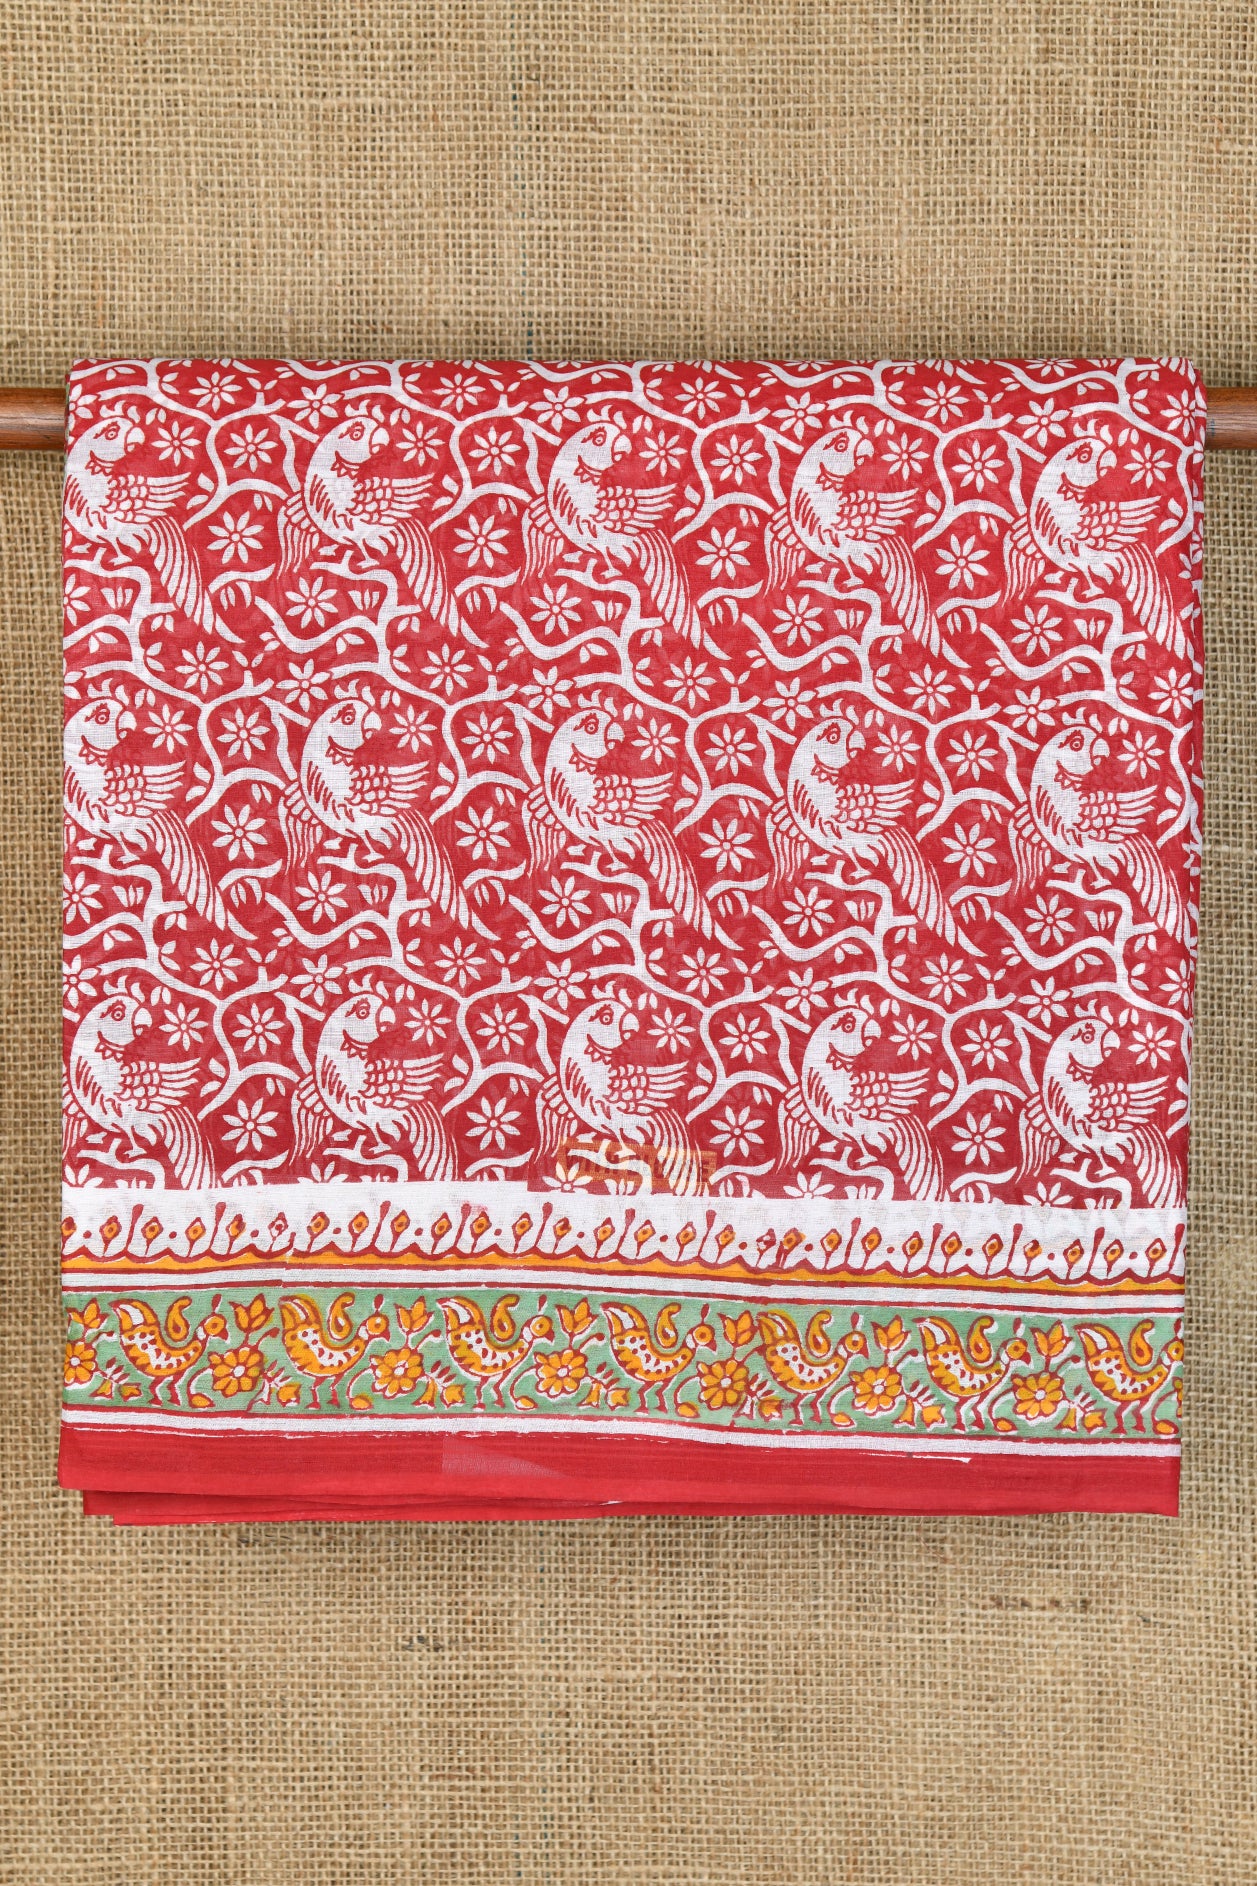 Parrot Motif Printed Maroon Hyderabad Cotton Saree